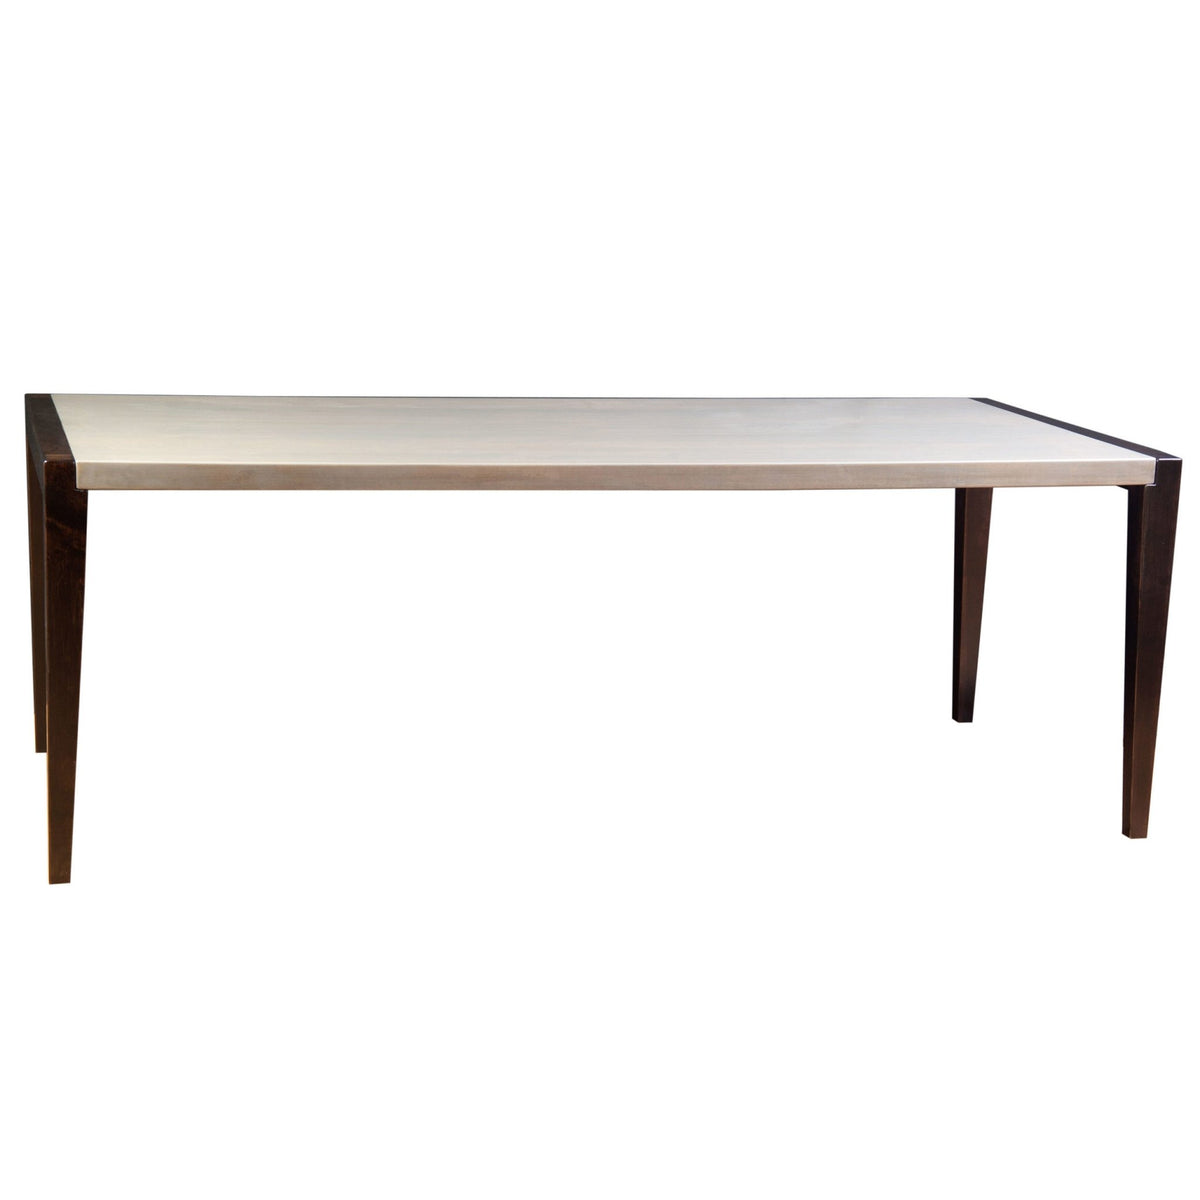 Savanna Table - snyders.furniture